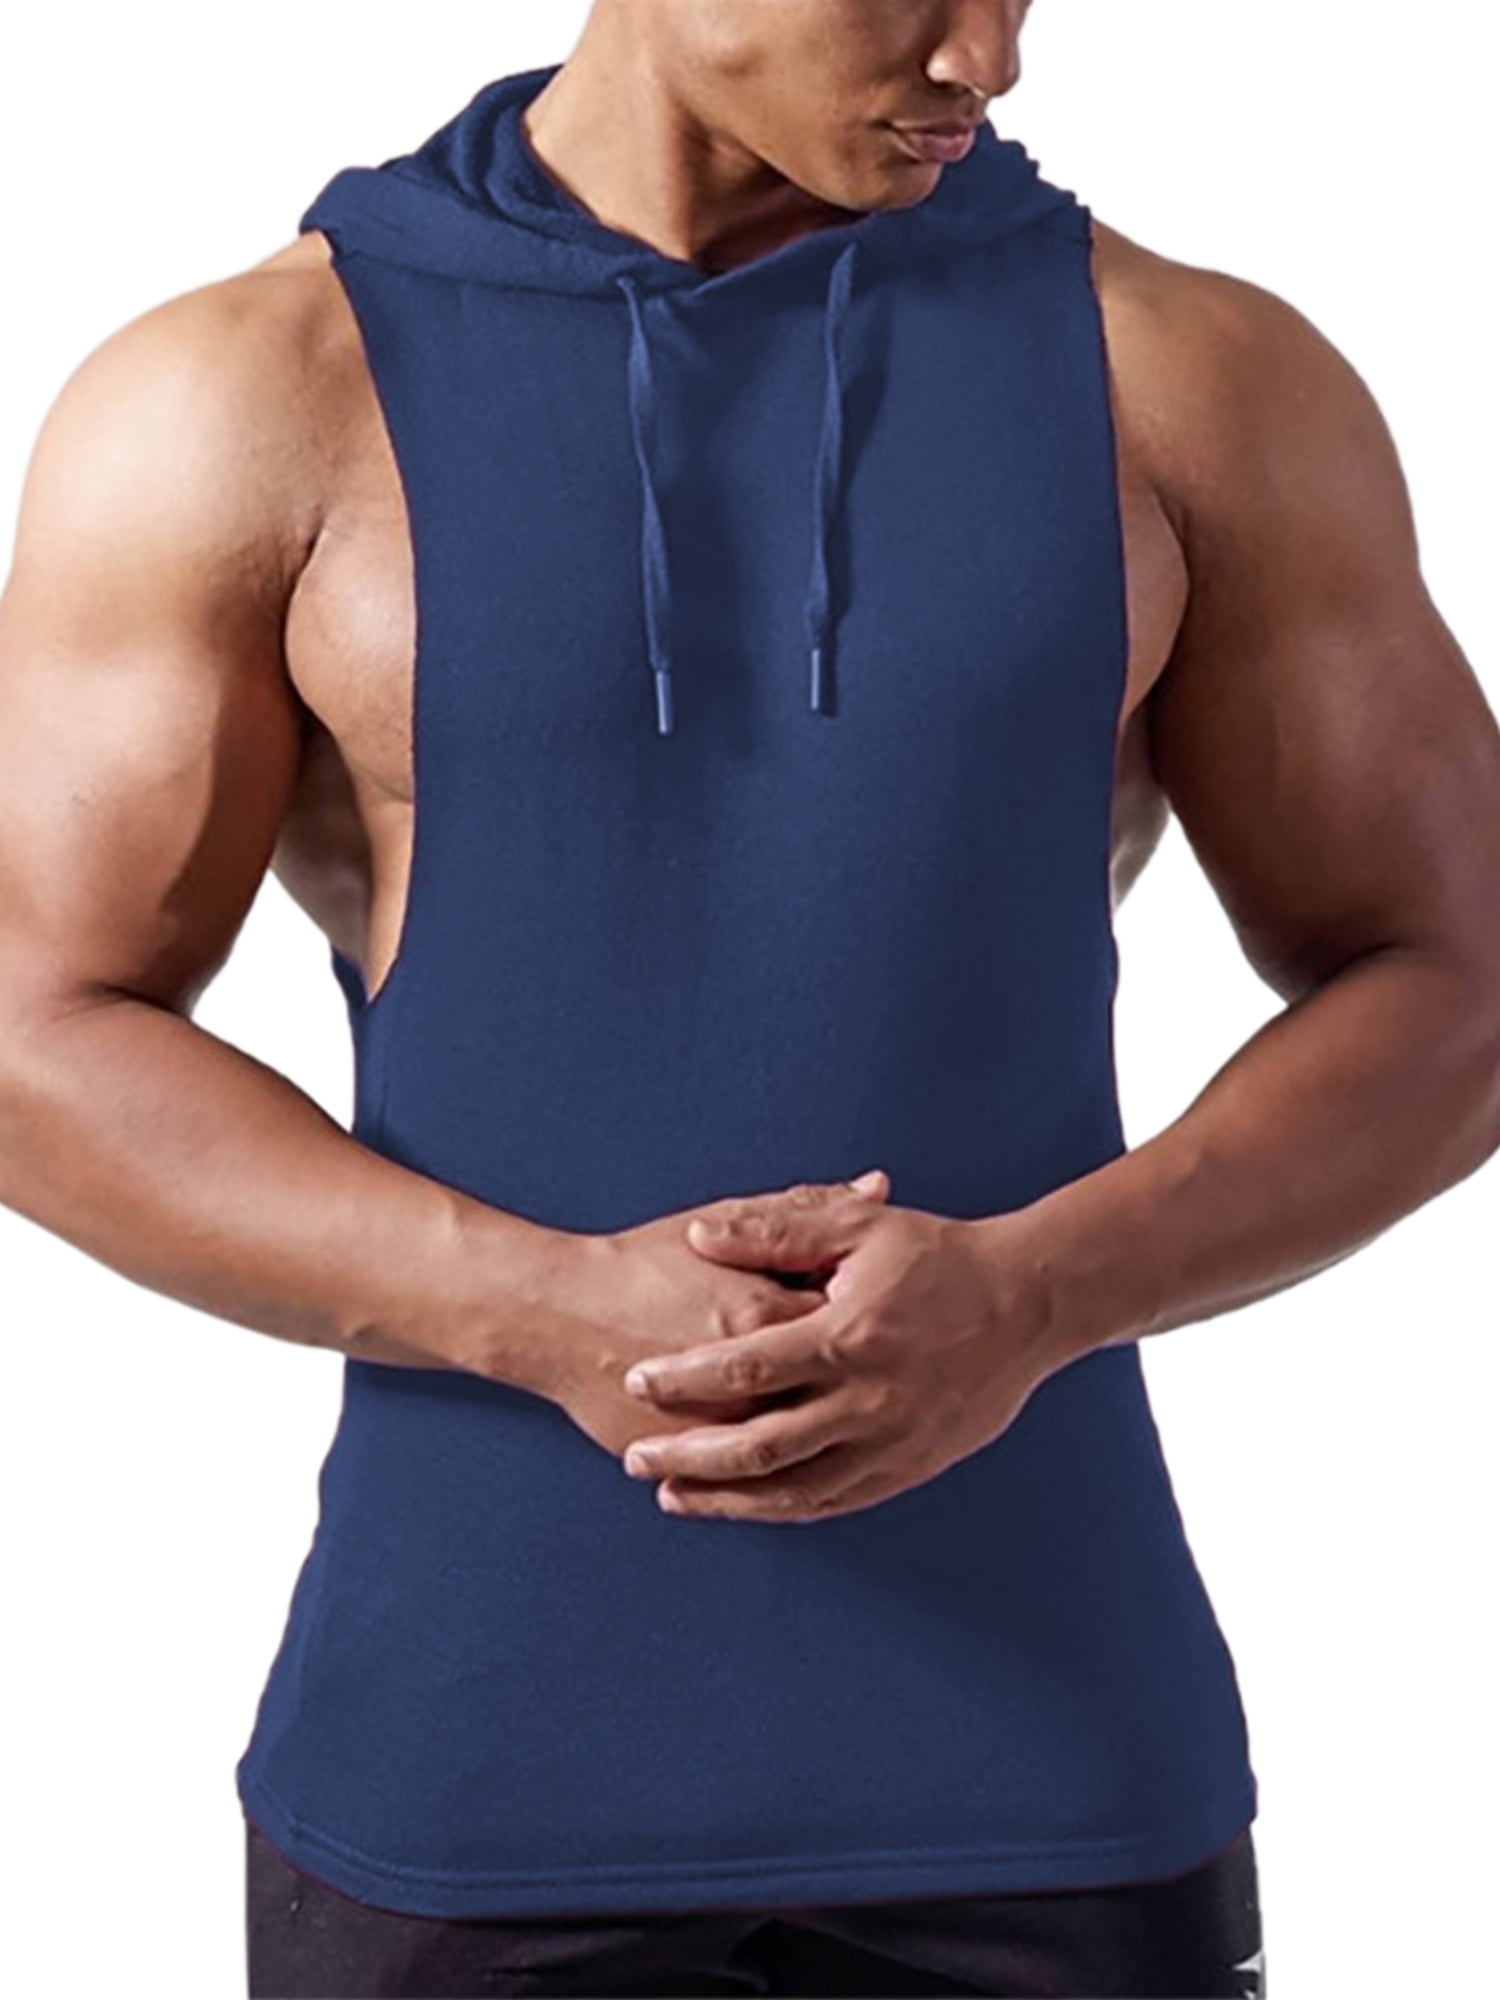 Men Summer Clothes,Mens Sleeveless Tank Top T-Shirt Mesh Breathable Bodybuilding Sport Fitness Sport Tee Shirt Blue,M 